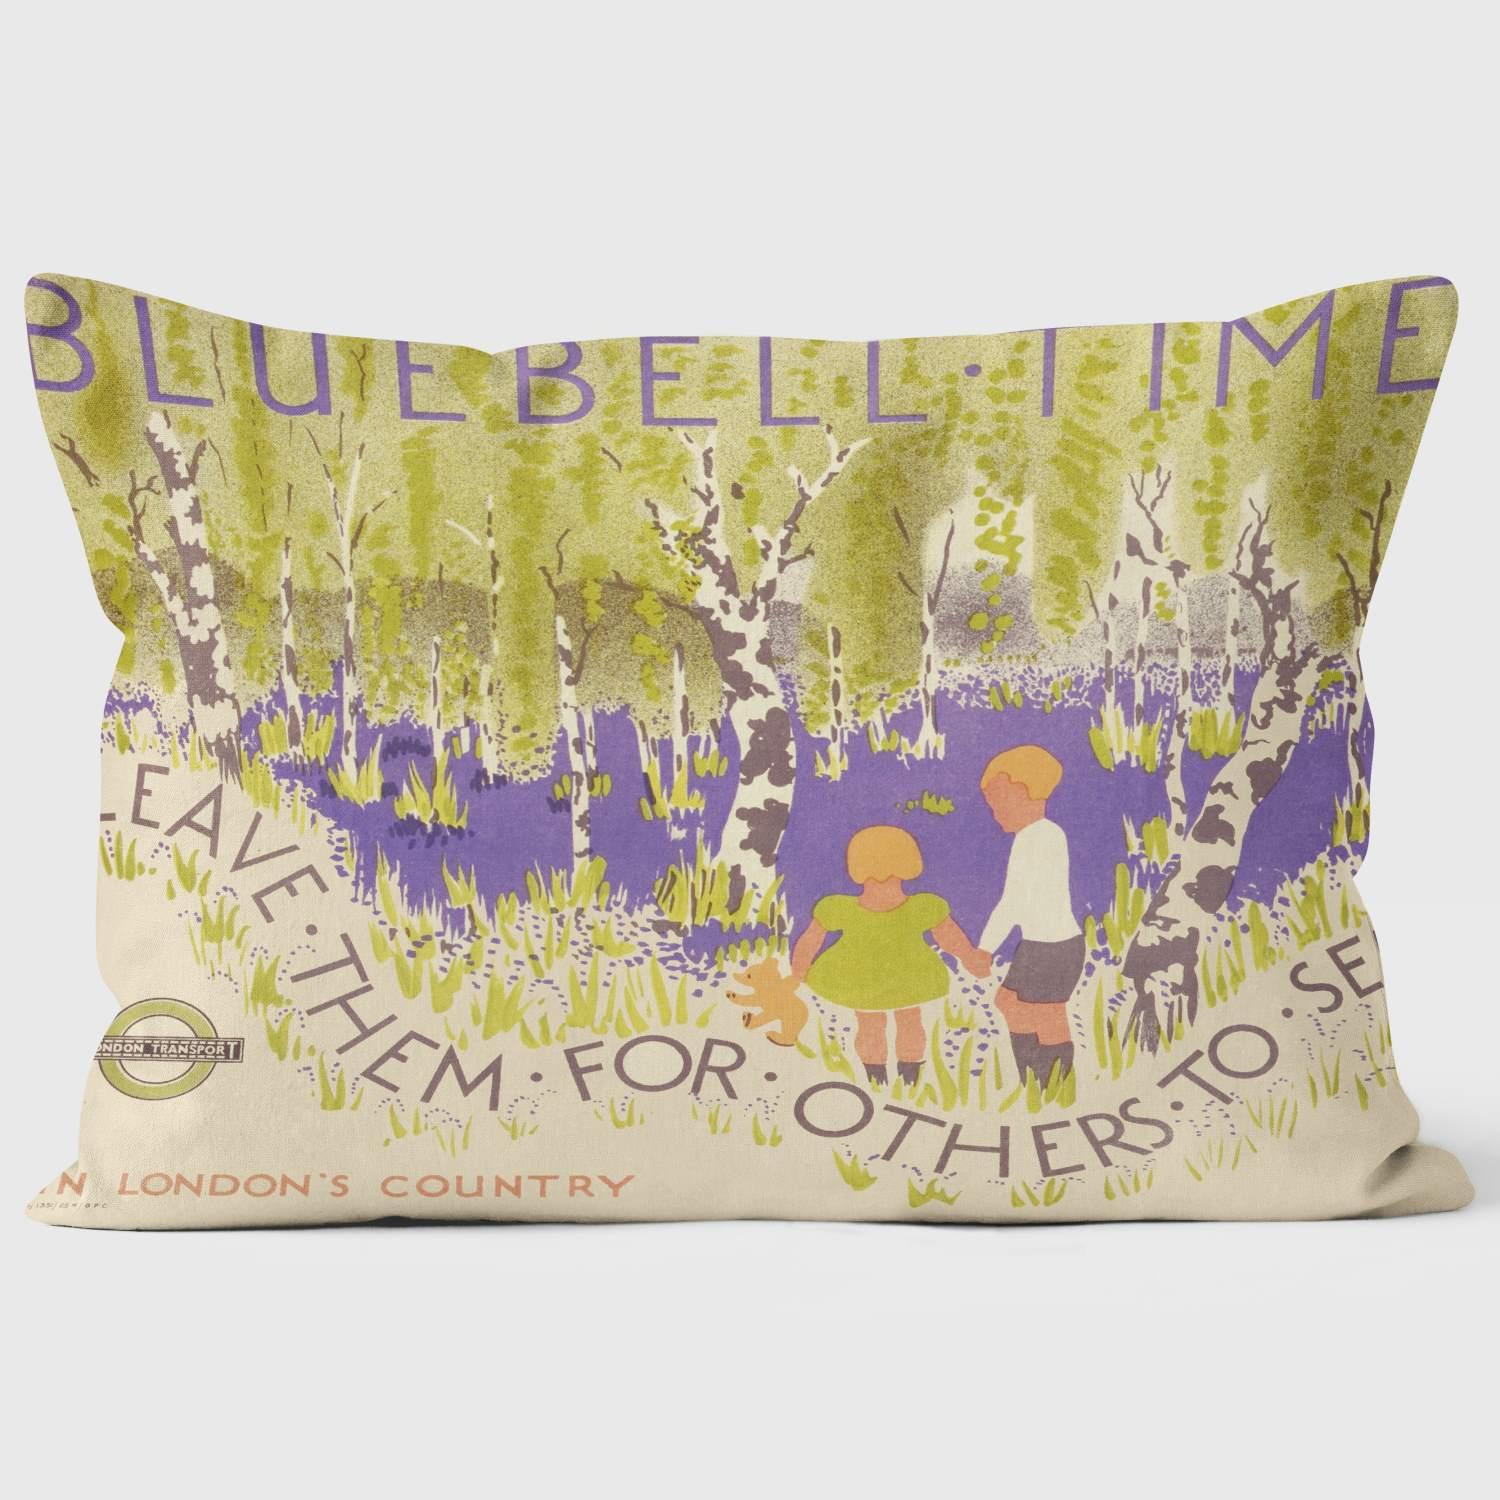 Bluebell Time - London Transport Cushion - Handmade Cushions UK - WeLoveCushions